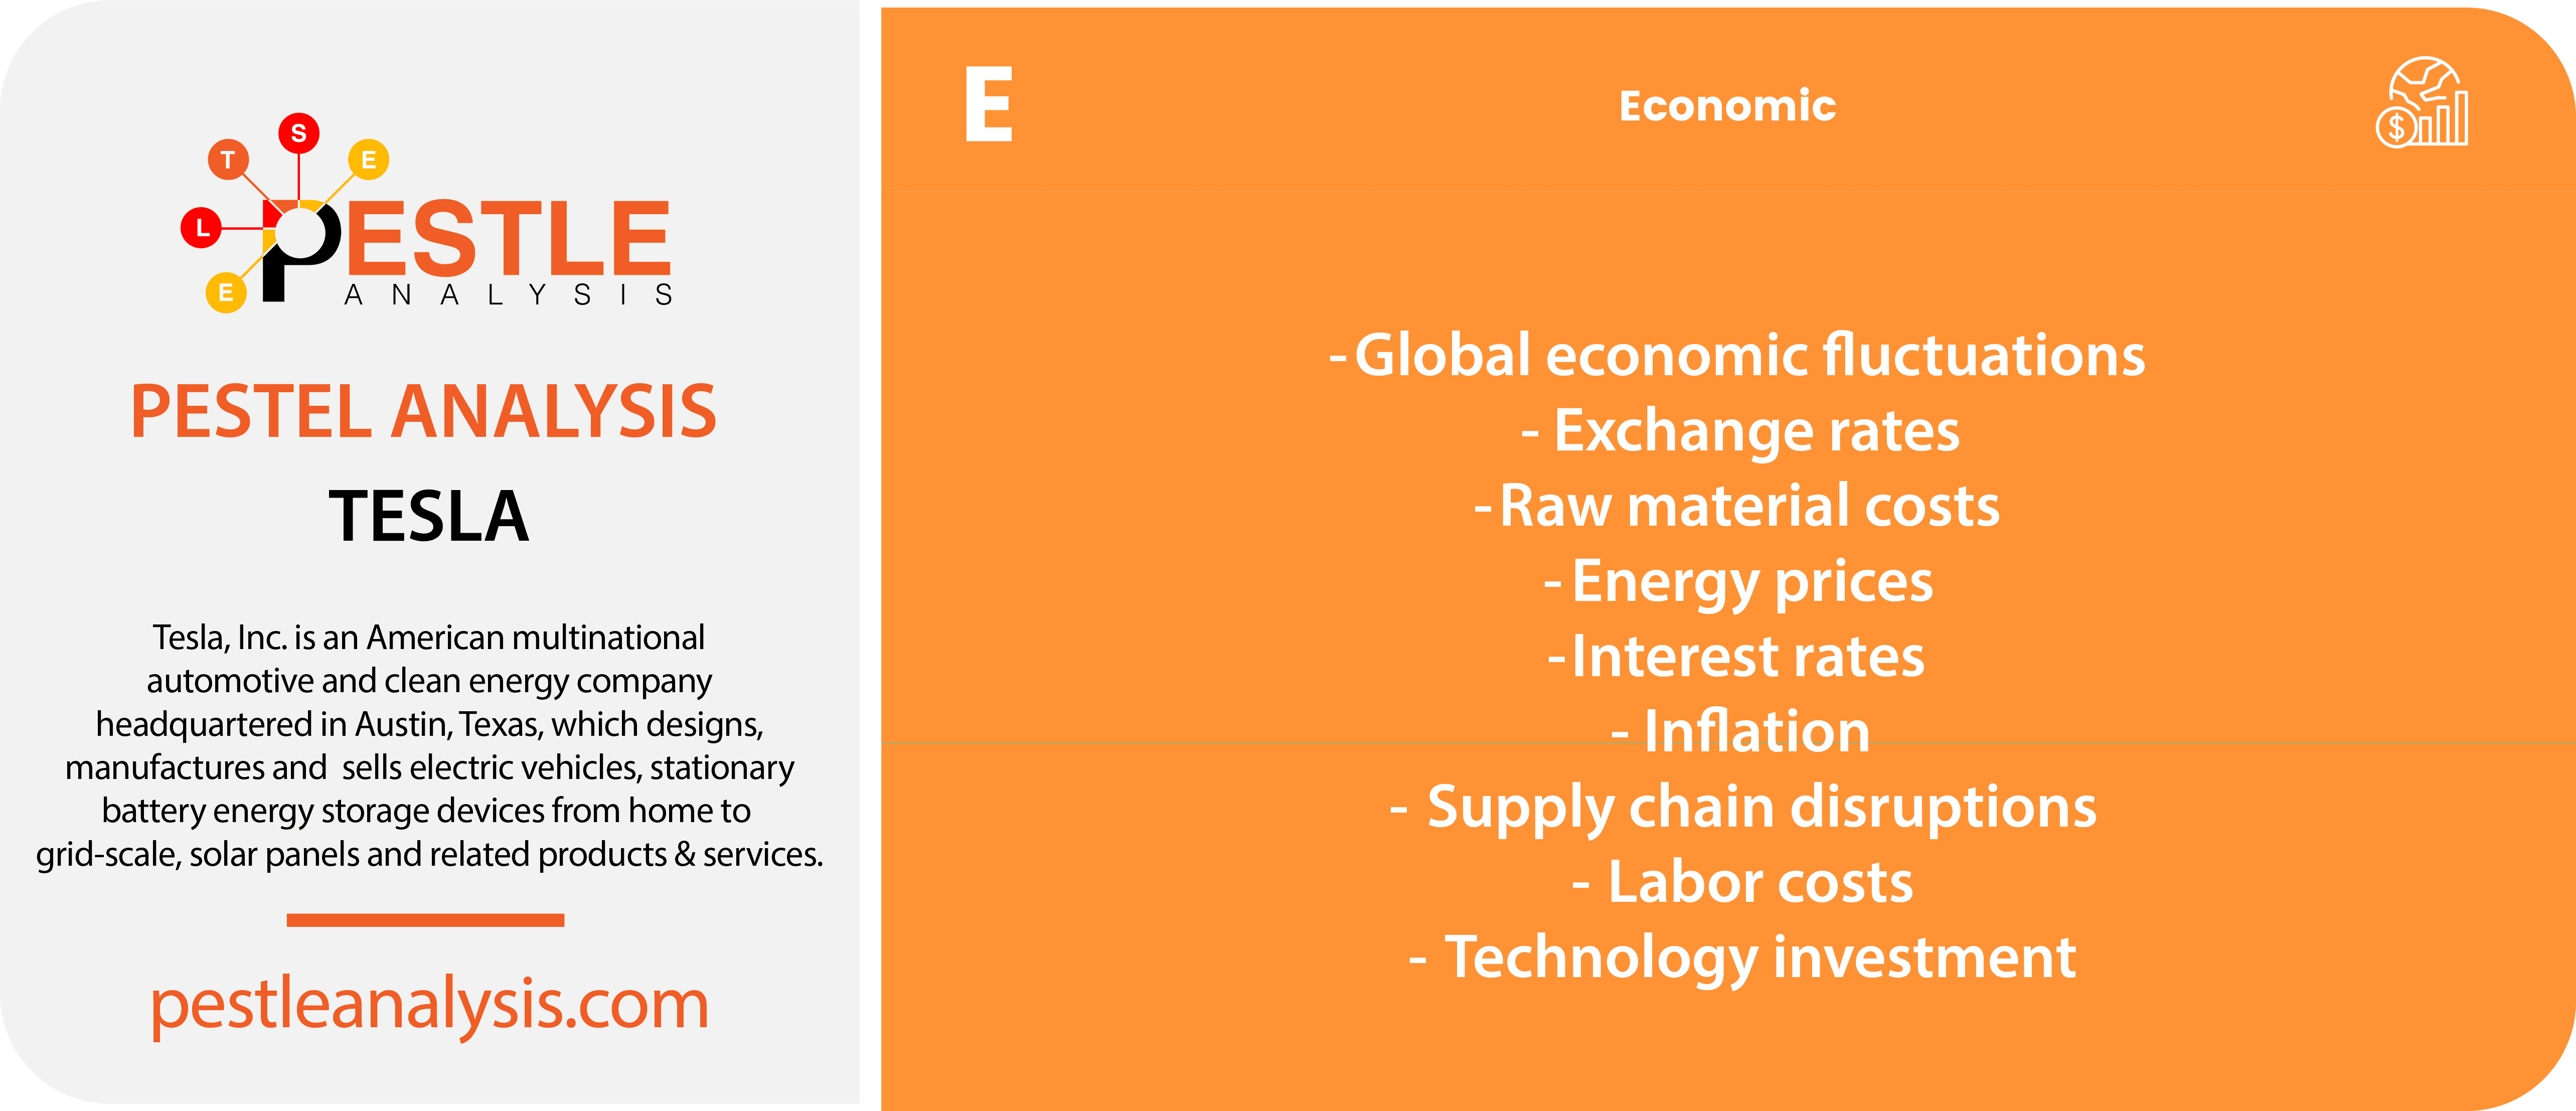 tesla-pestle-analysis-economic-factors-template